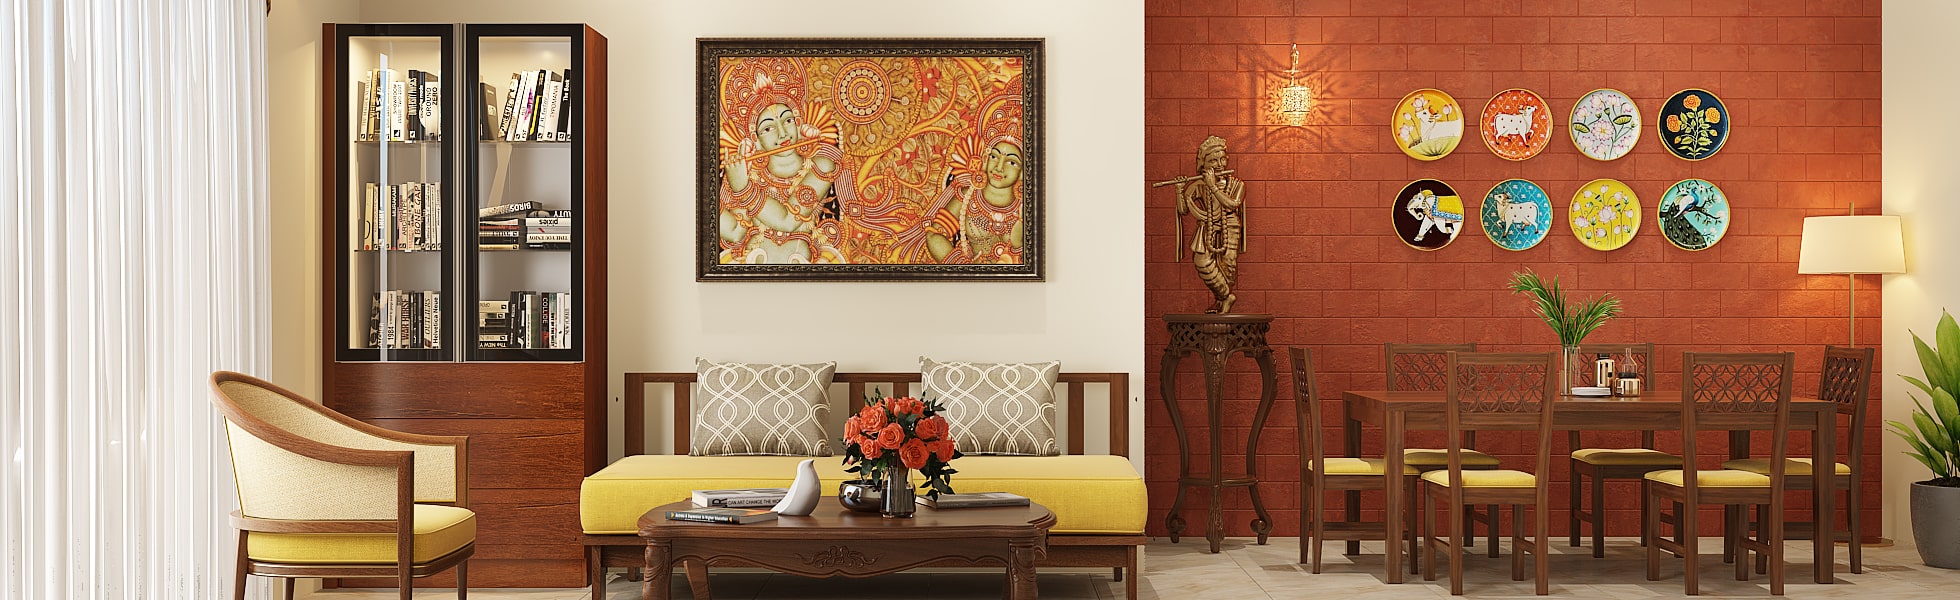 Best interior designers in Chennai for home interiors